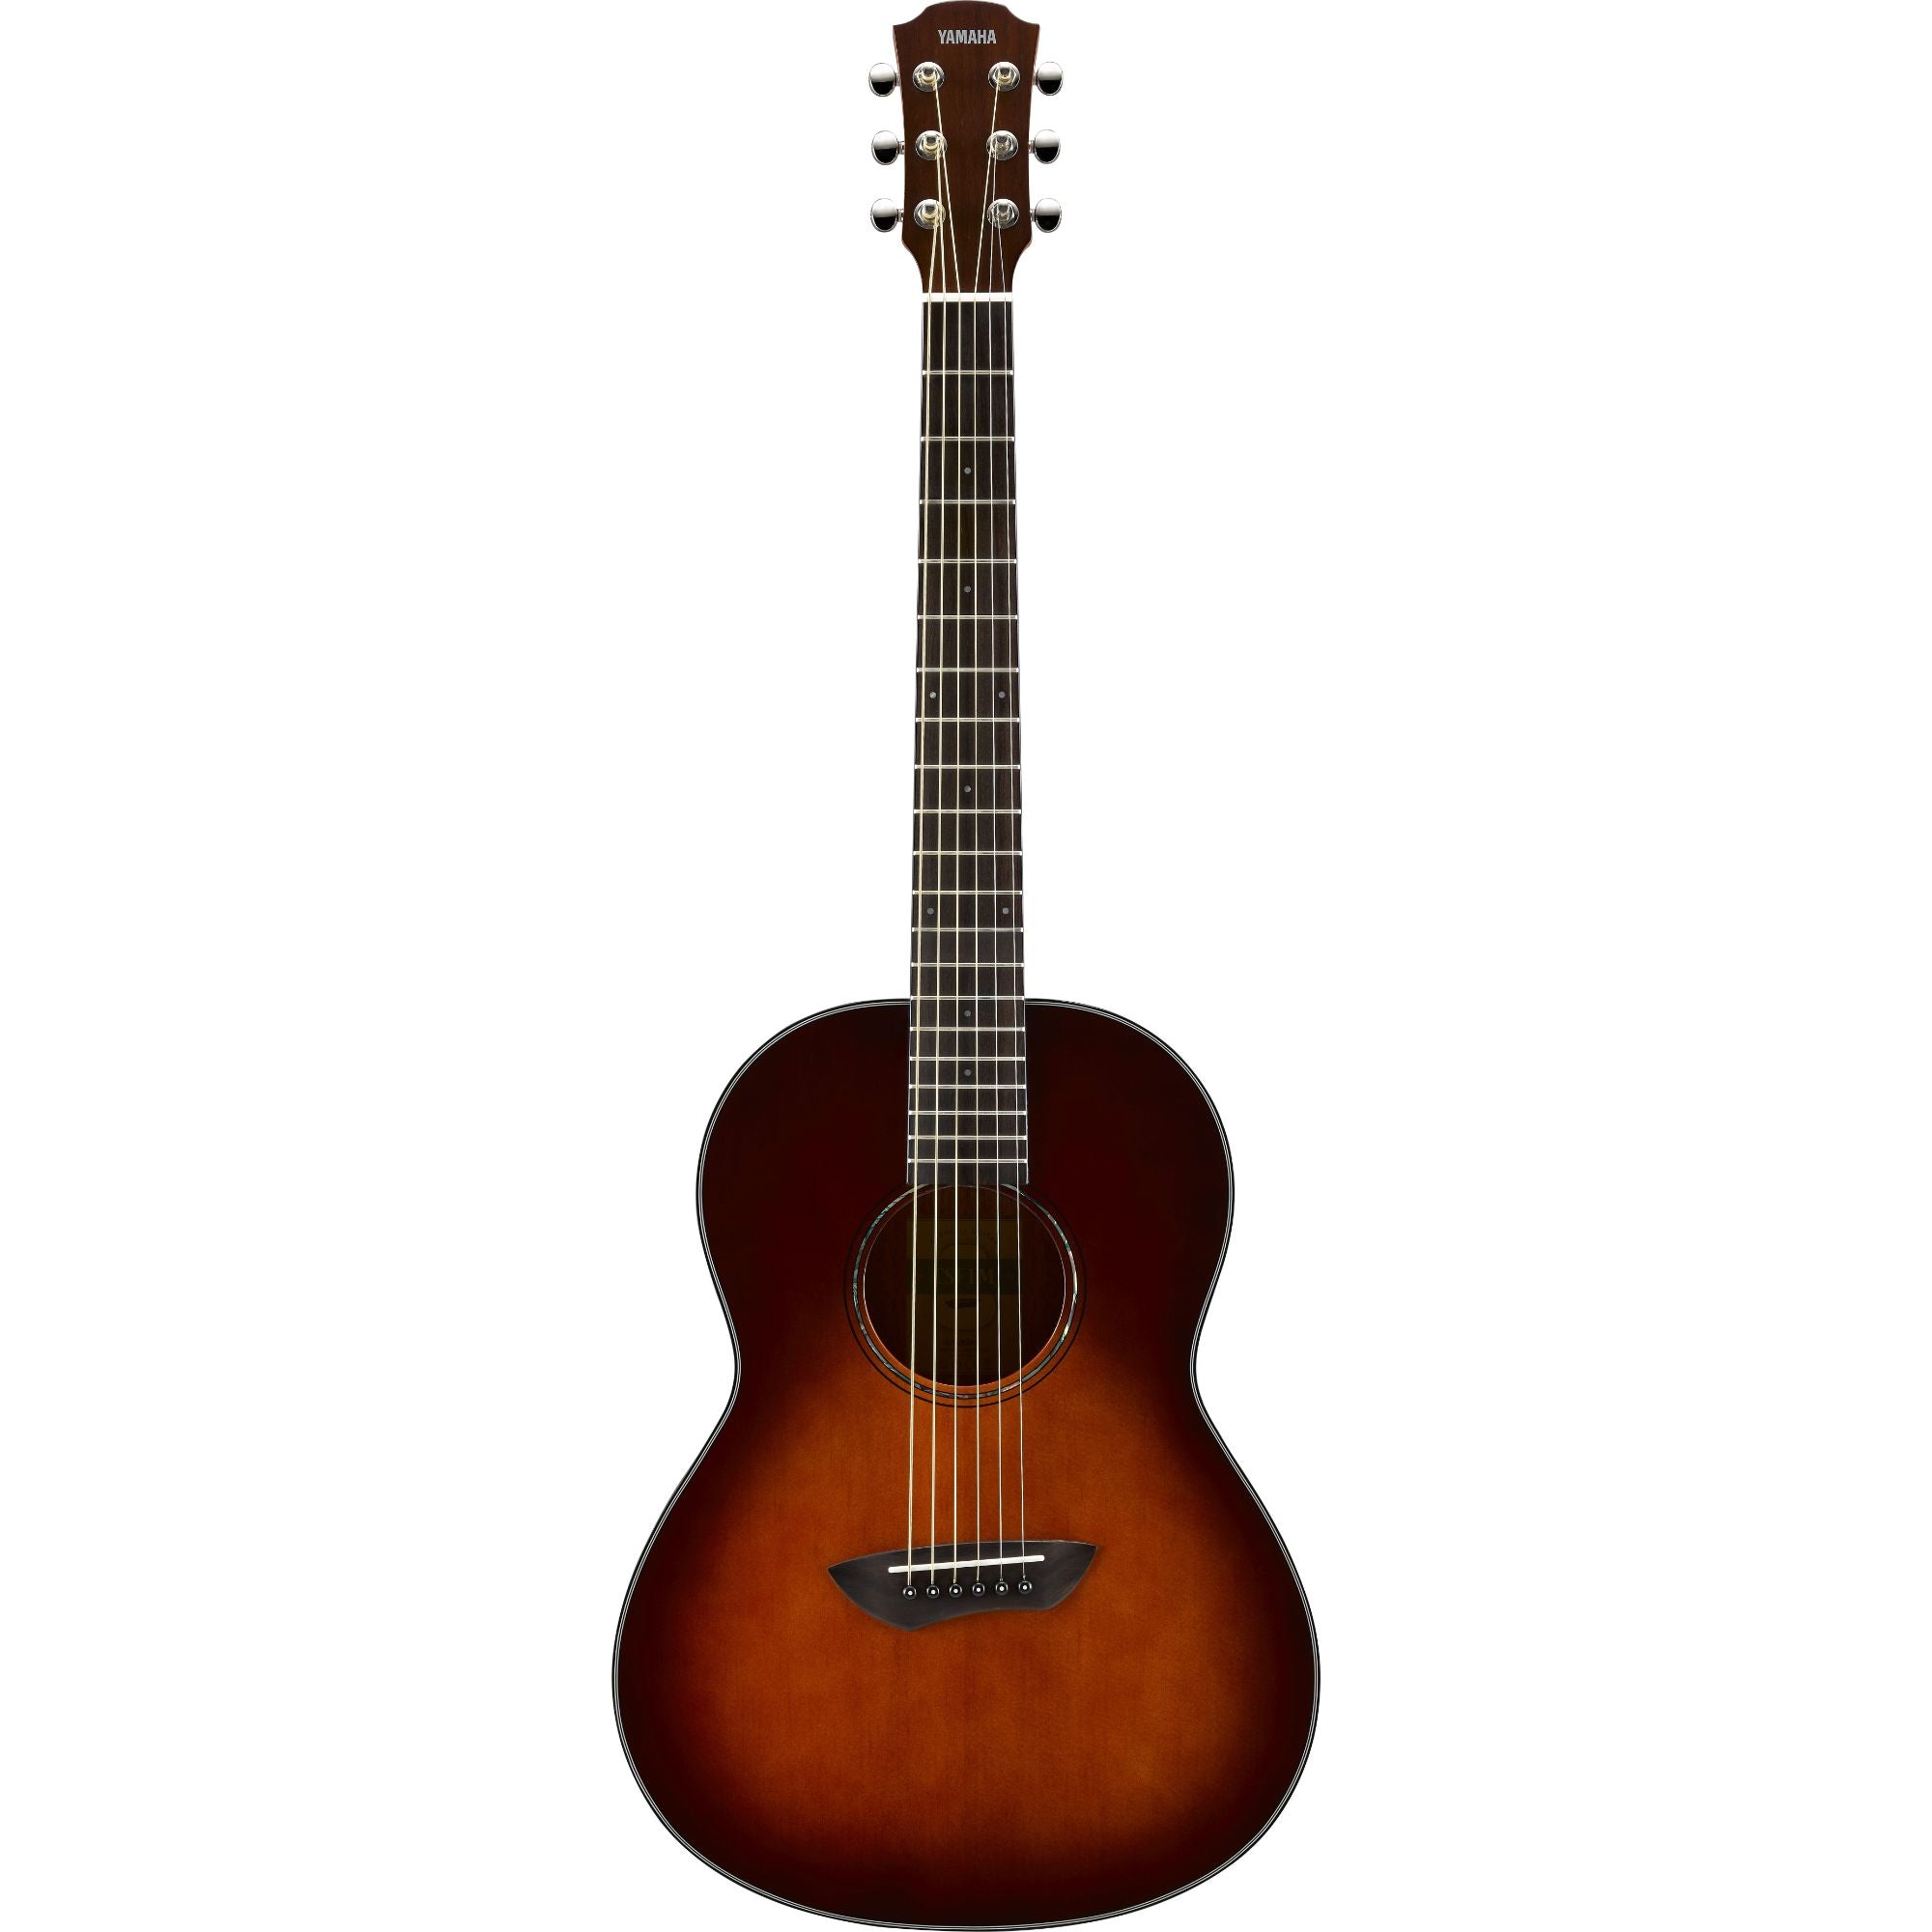 Yamaha CSF1M Modern Parlor Acoustic Guitar, Tobacco Brown Sunburst